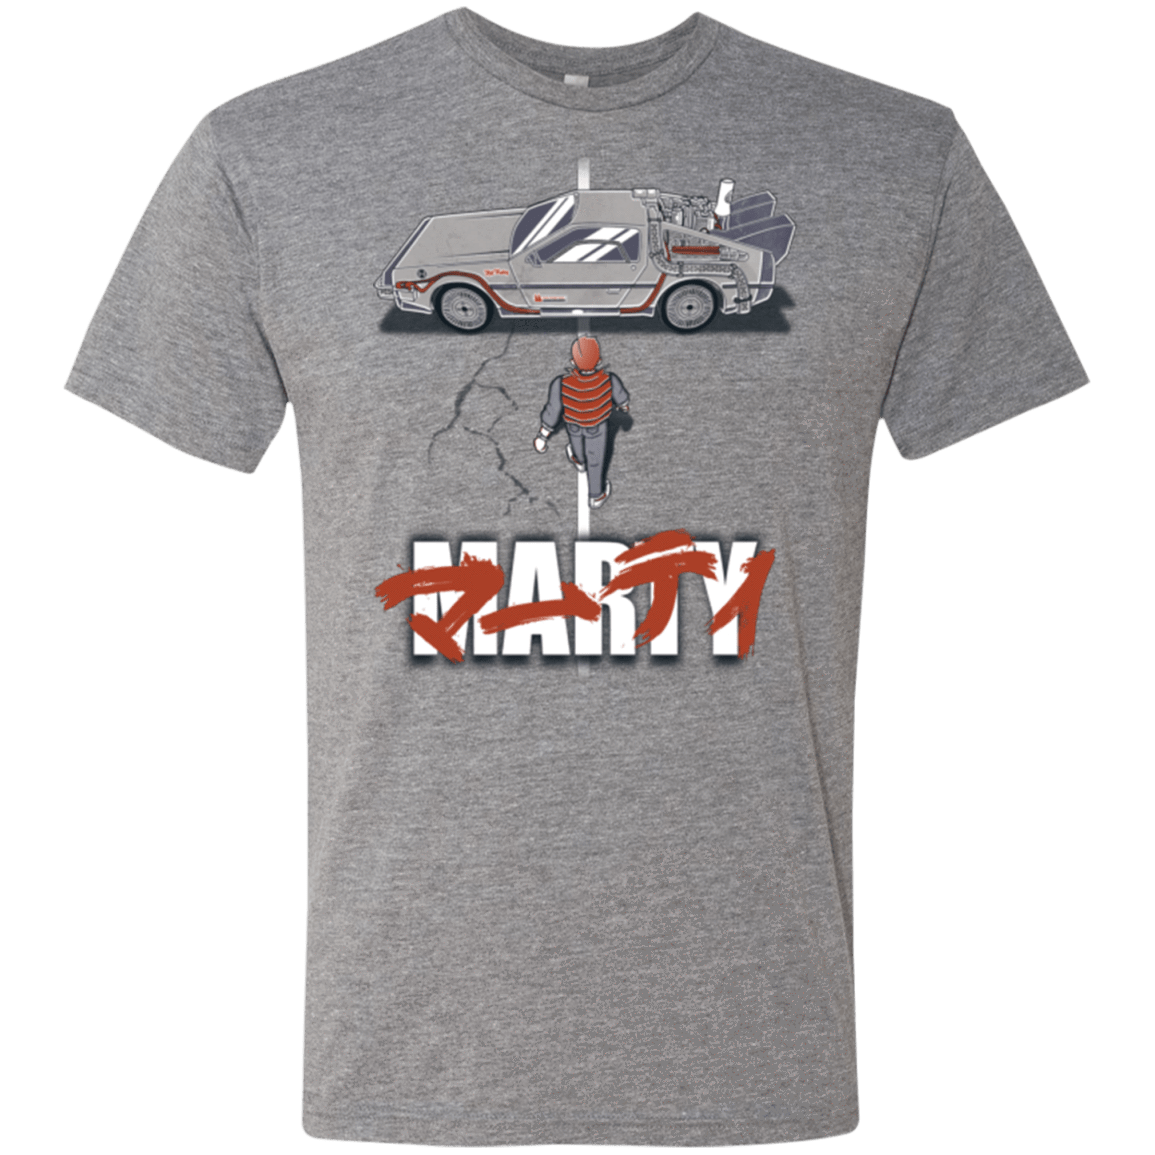 T-Shirts Premium Heather / Small Marty 2015 Men's Triblend T-Shirt